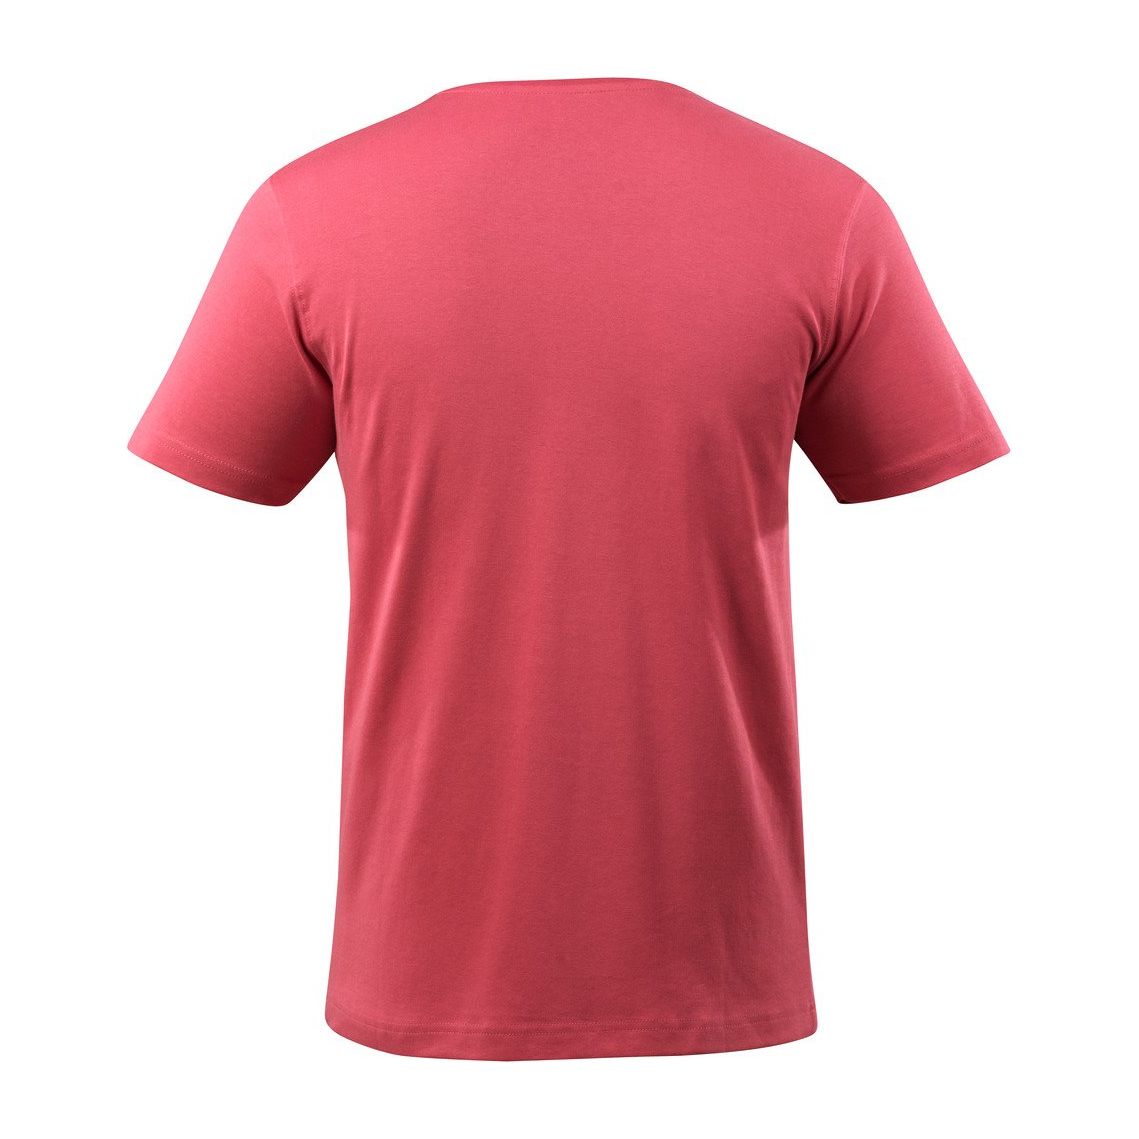 Mascot Vence T-shirt Slim-Fit Raspberry Red 51585-967-96 Back